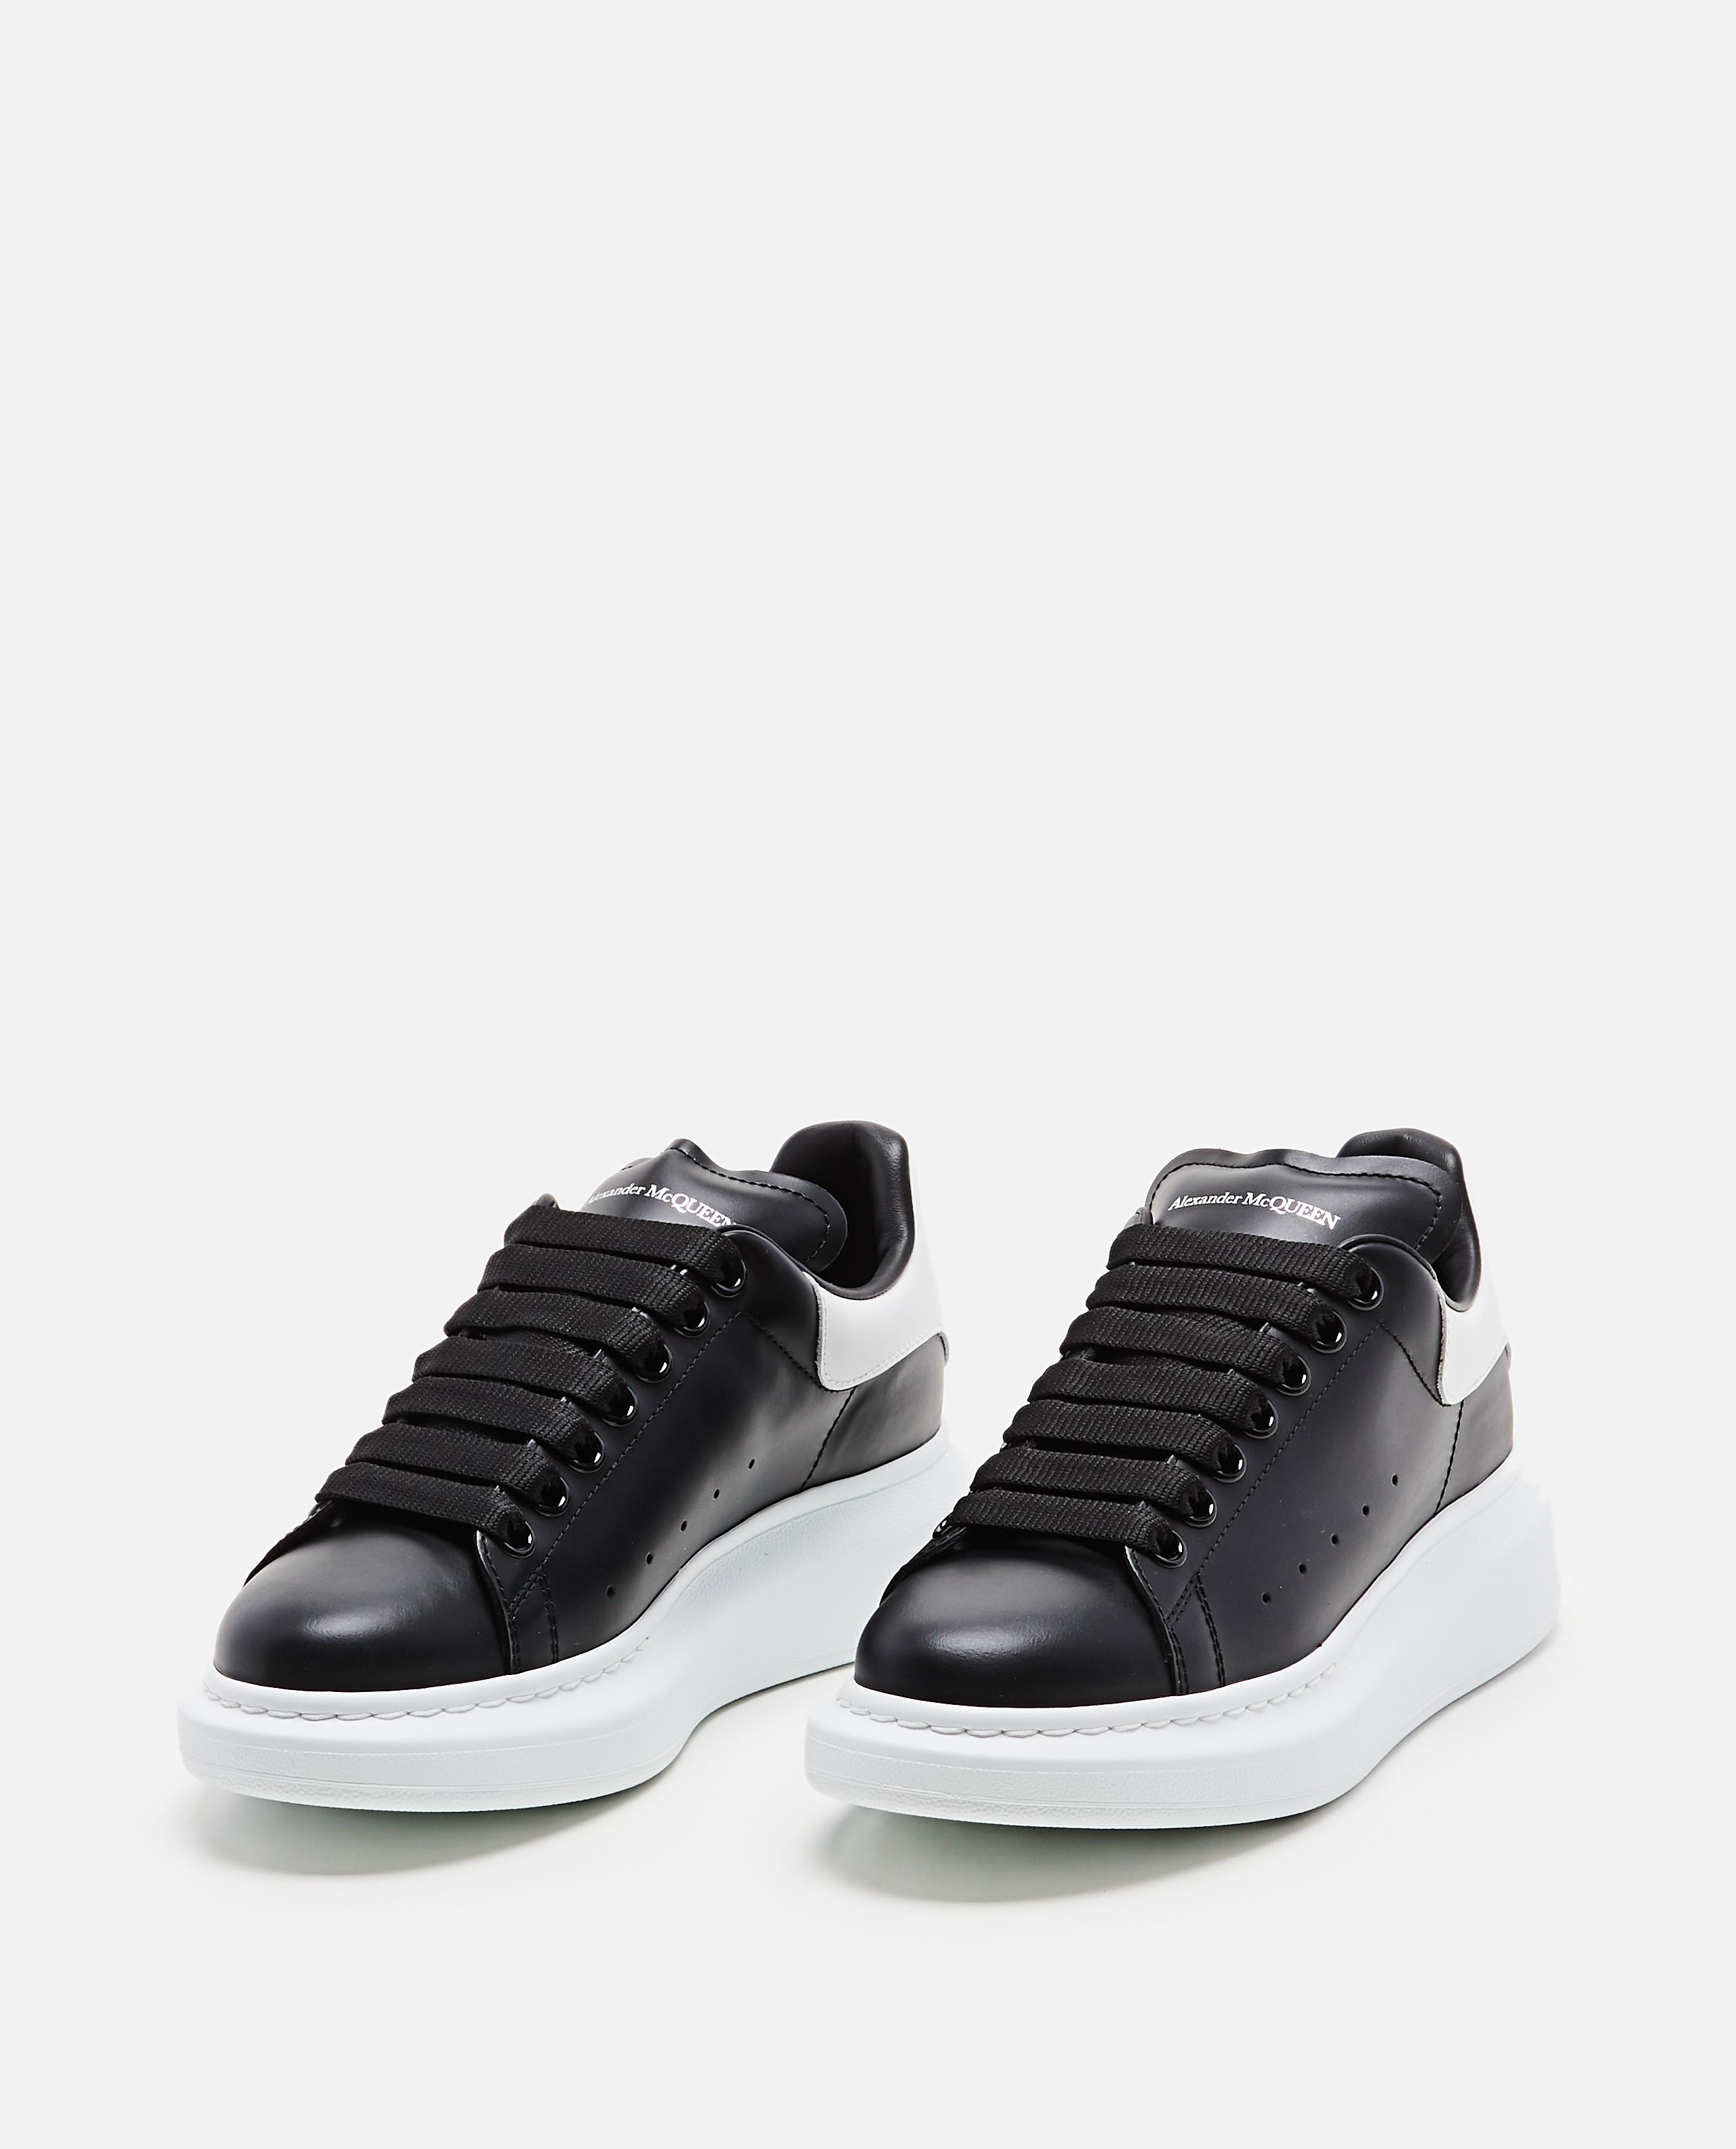 Alexander McQueen Oversize Sneakers In Leather in Black for Men - Save ...